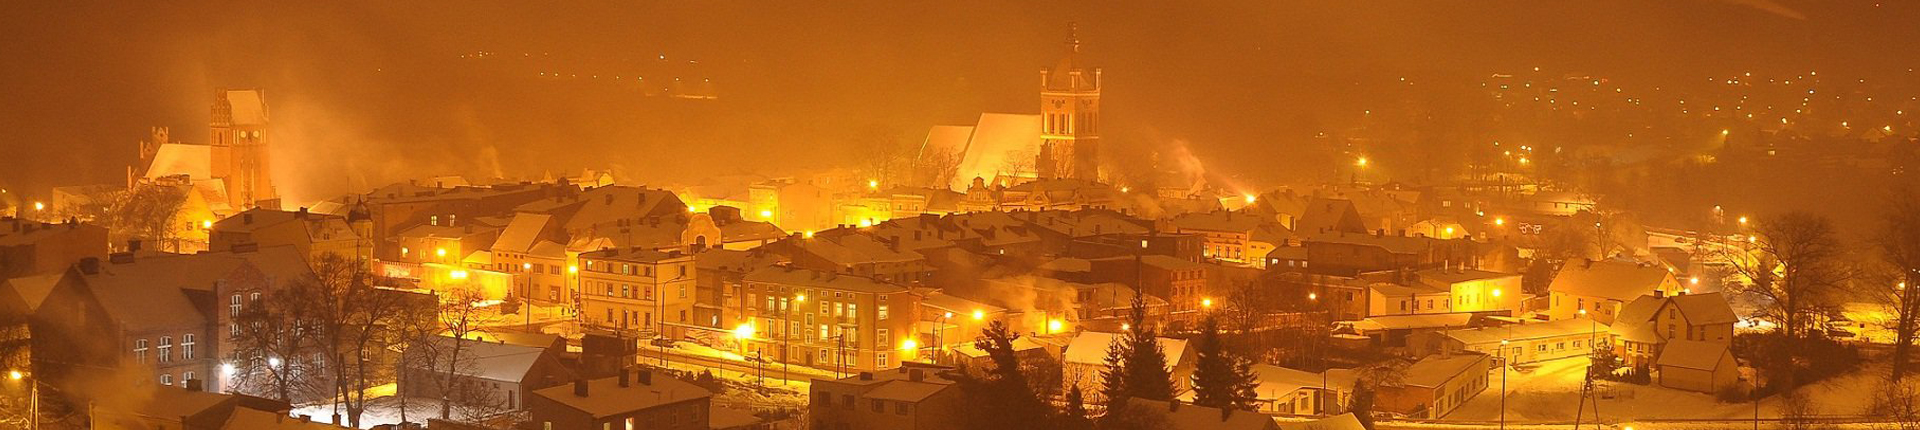 The Golub-Dobrzyń City